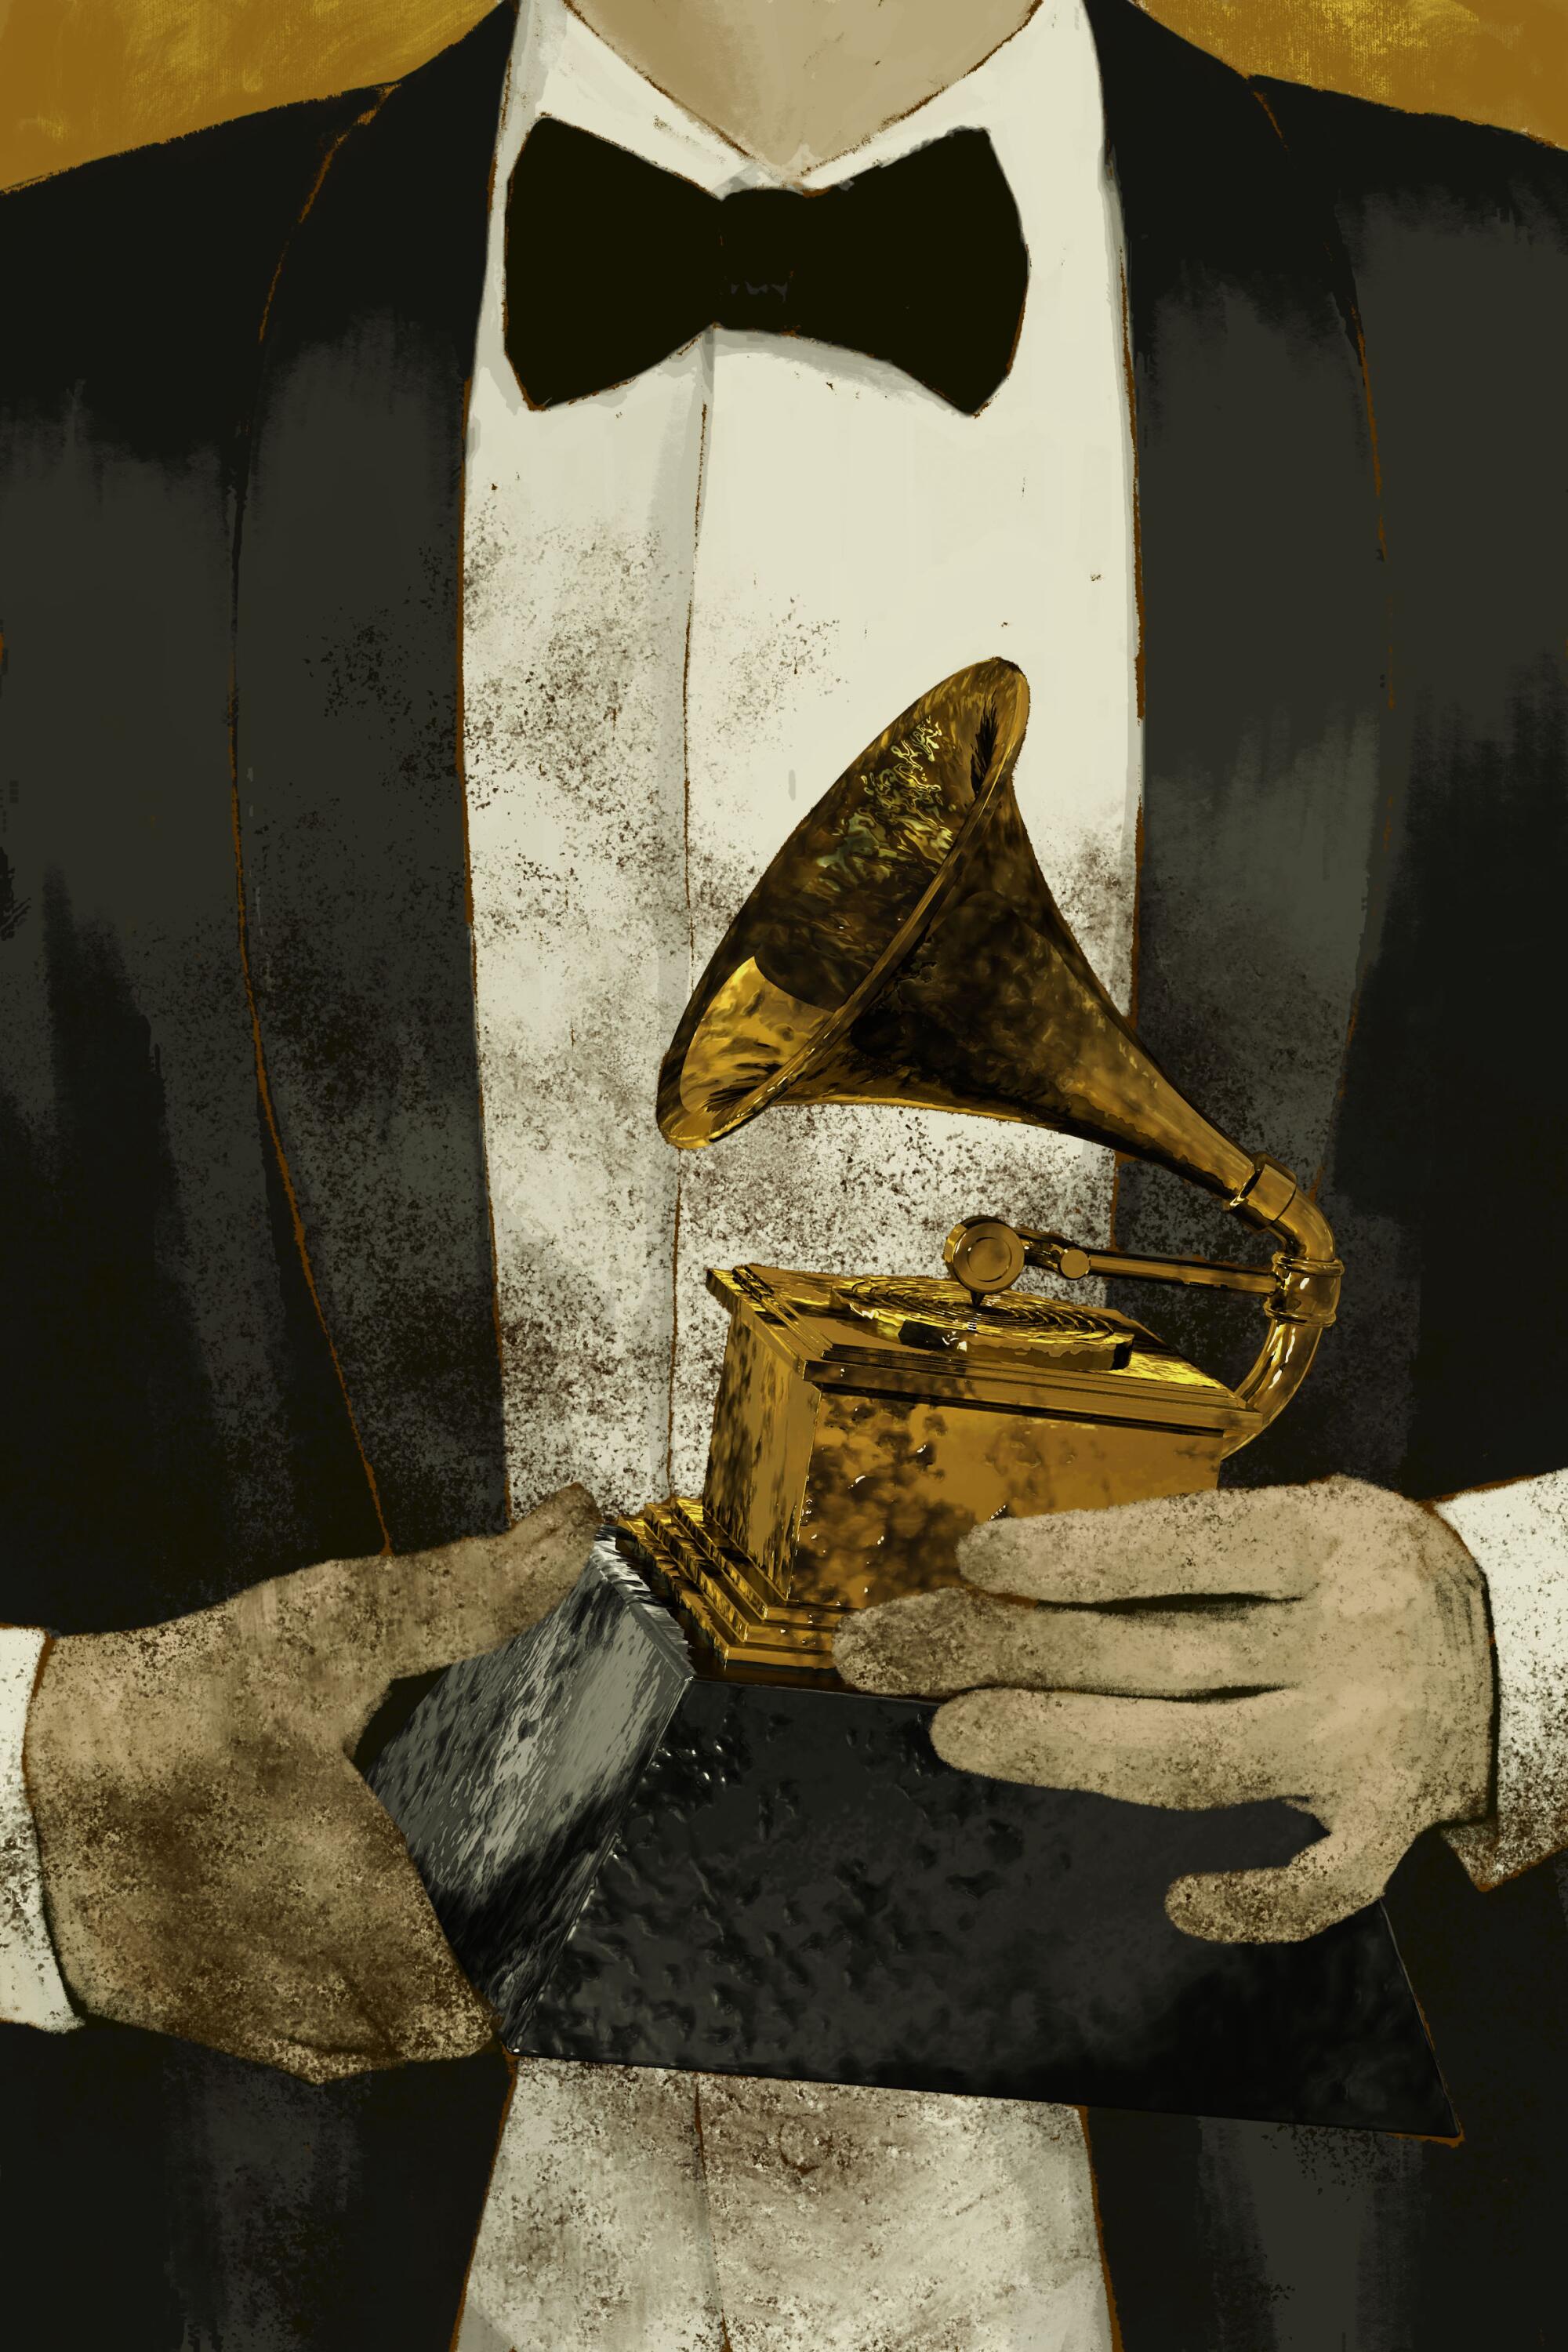 The torso of a person in a tuxedo holding a Grammy statuette